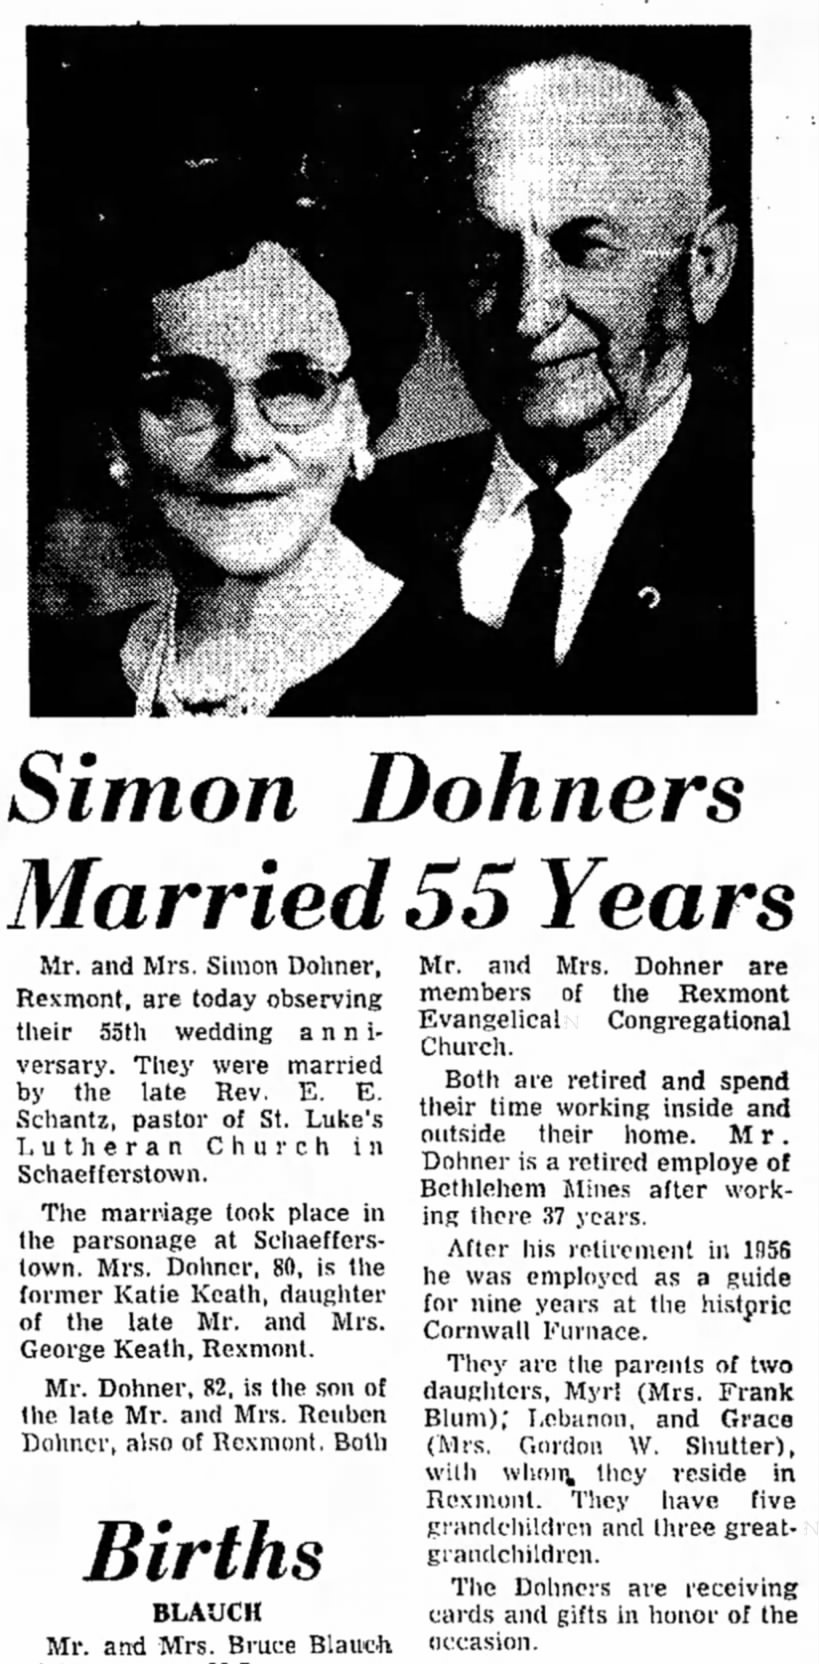 1971 06 17 - Simon Dohners Married 55 Years - Lebanon Daily News (Lebanon PA)